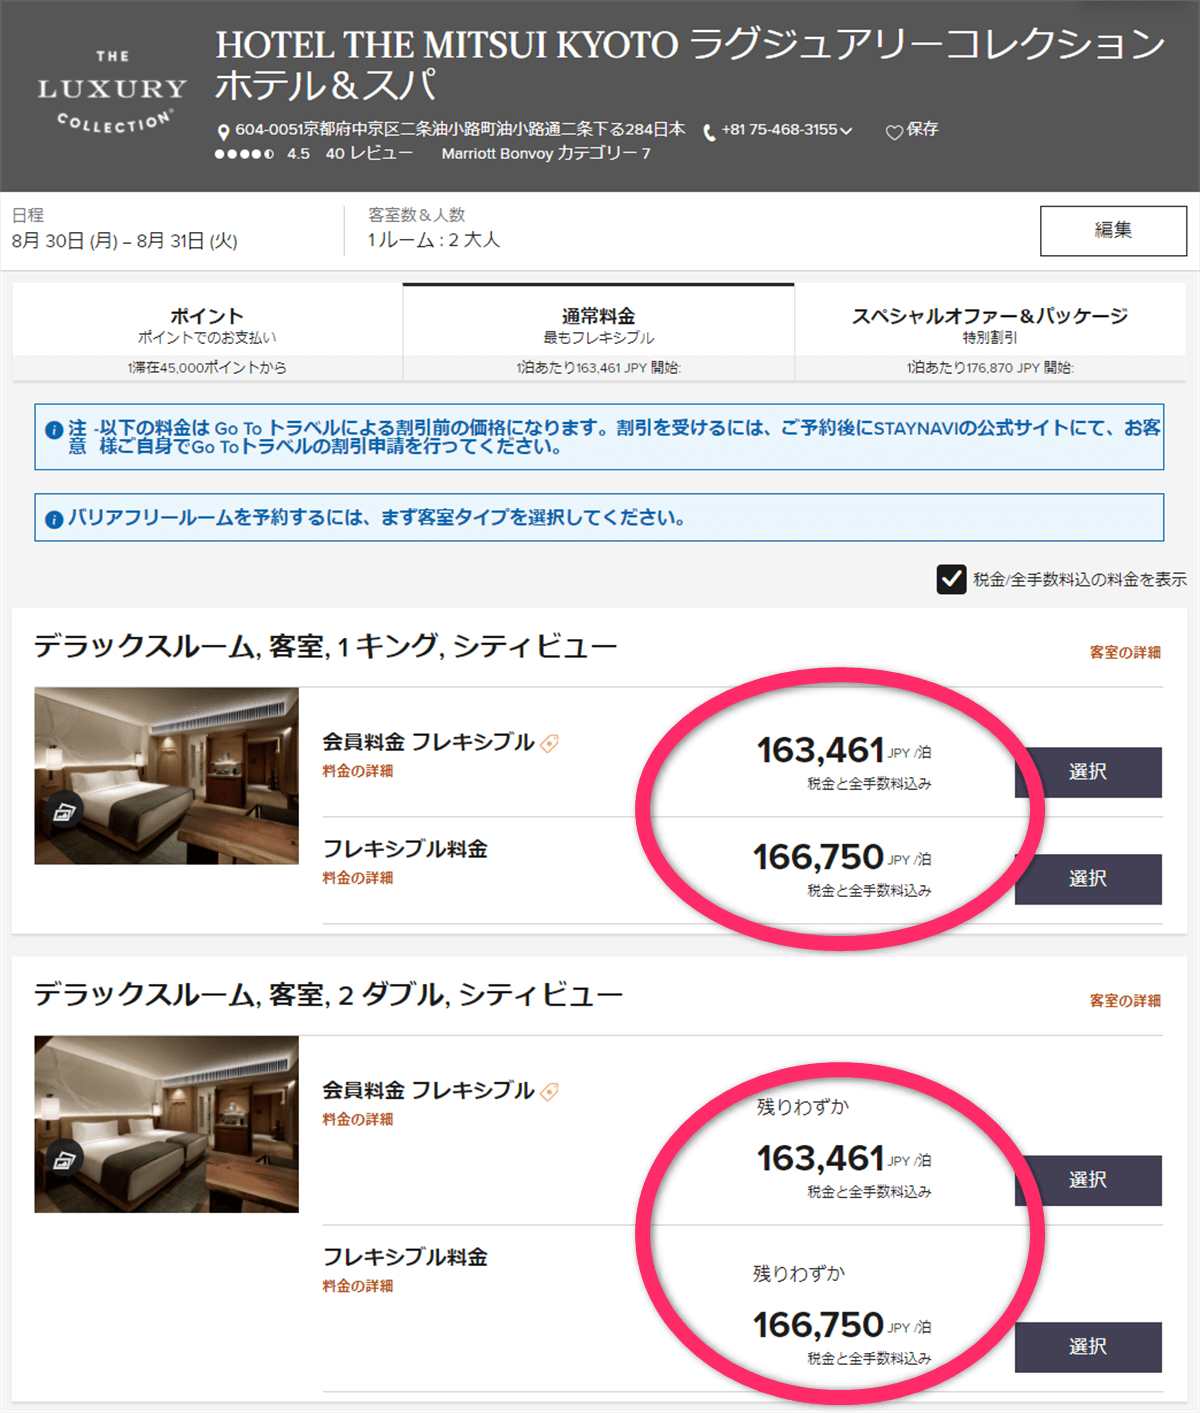 HOTEL THE MITSUI KYOTOの有償宿泊料金